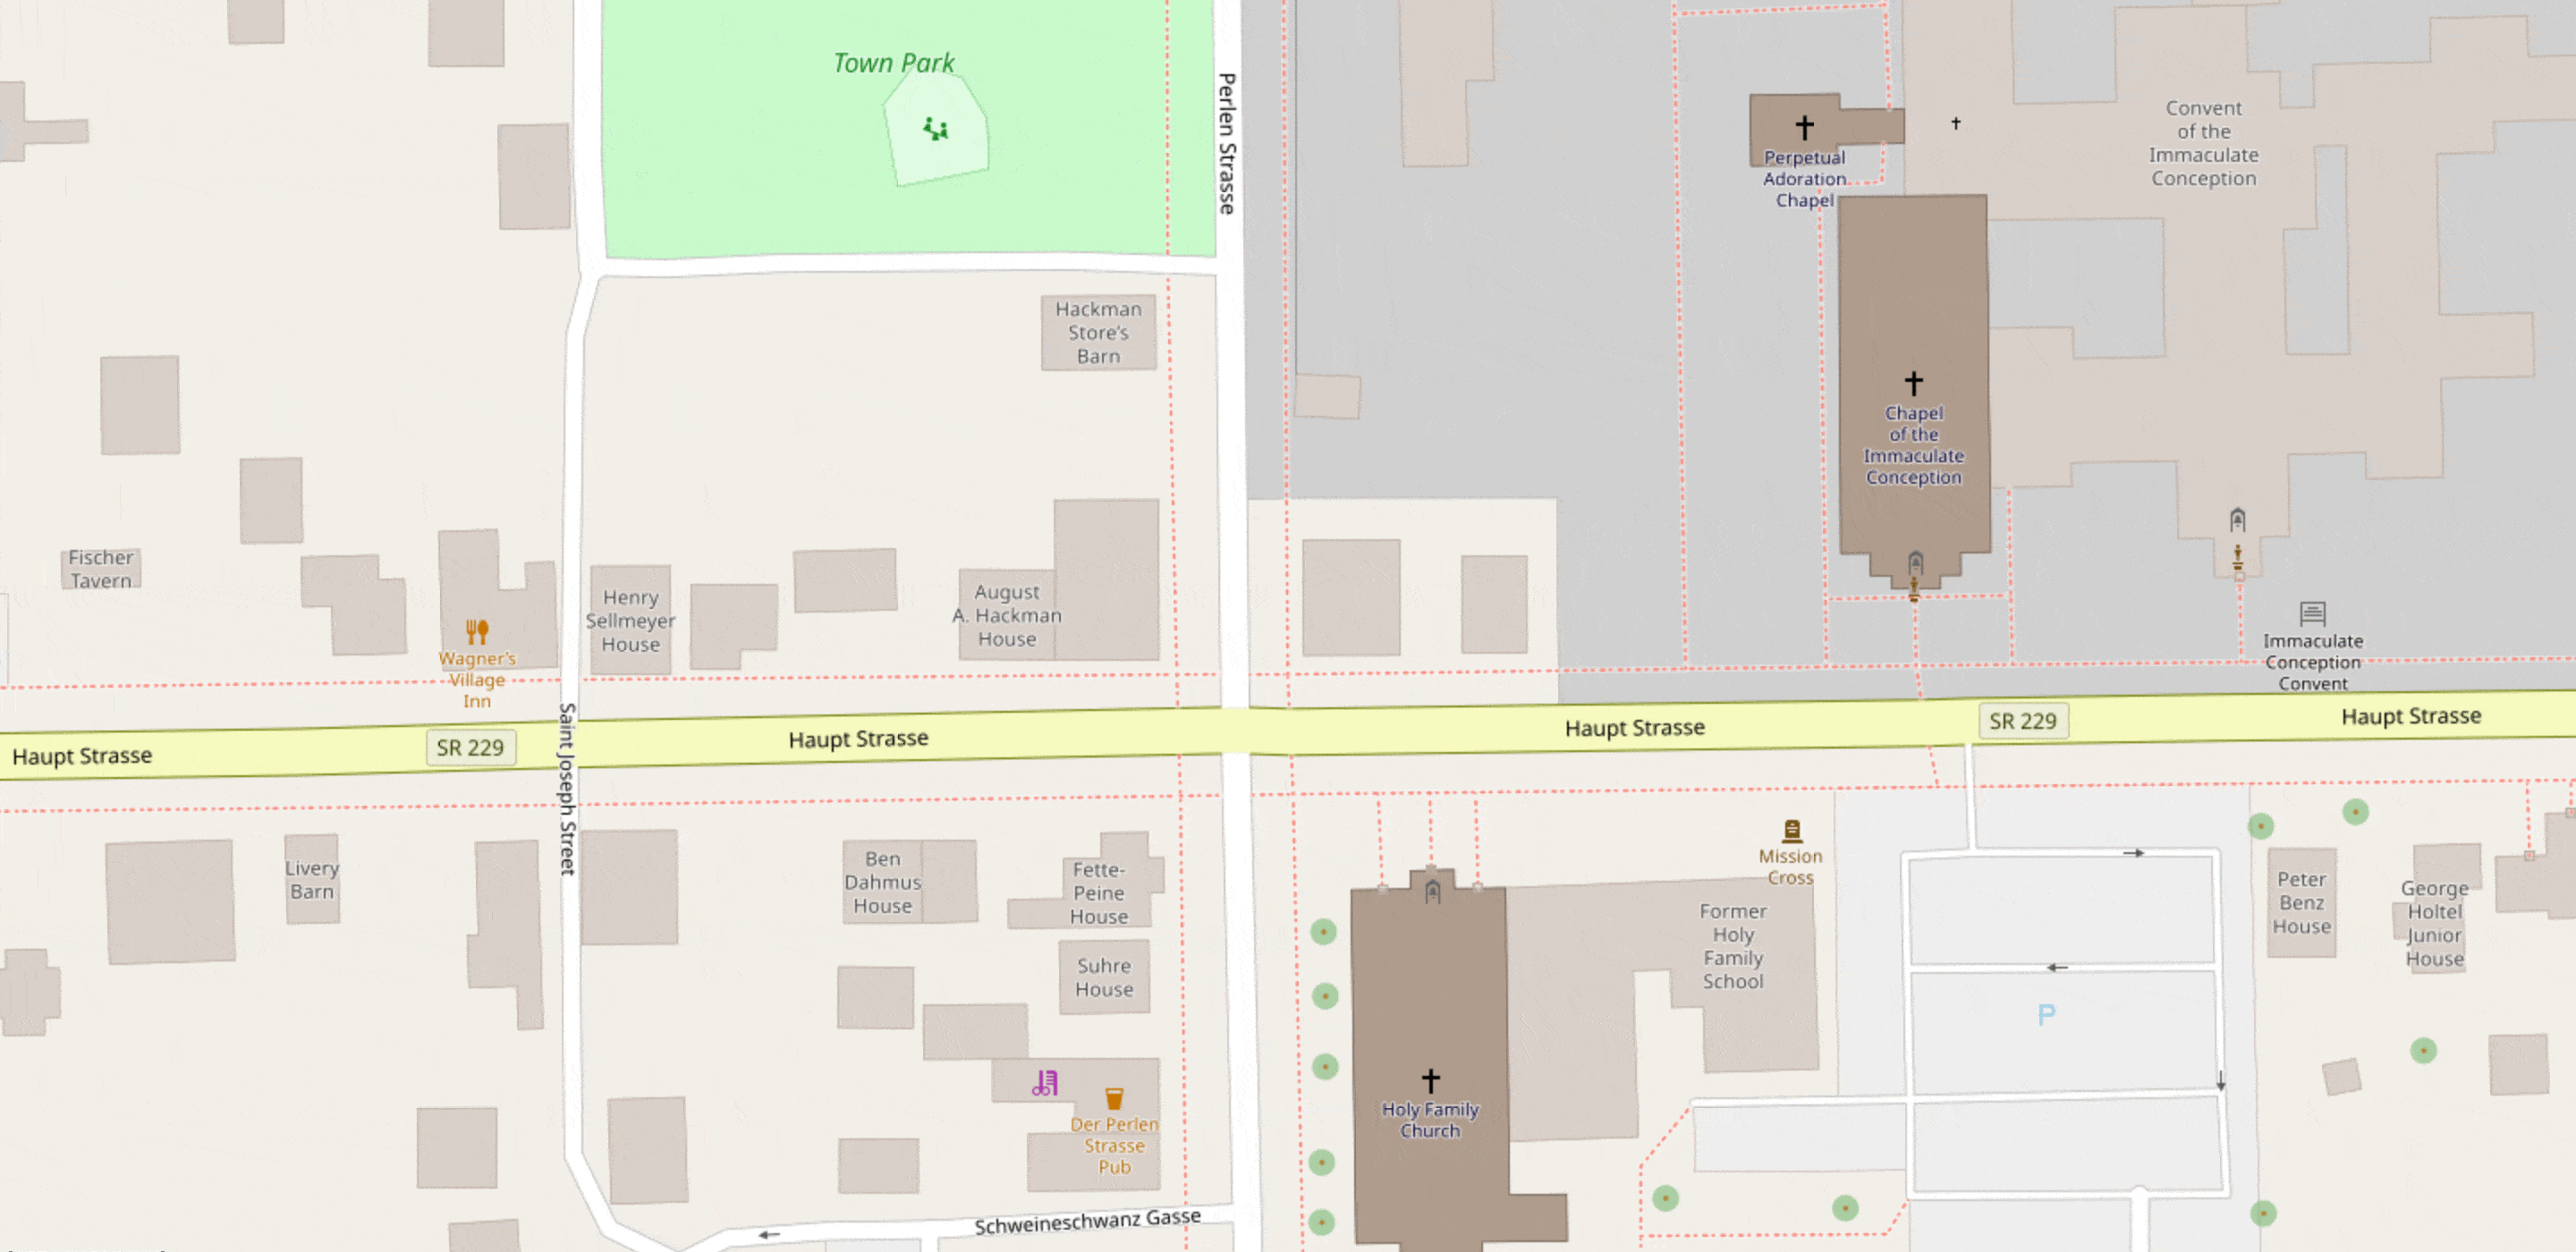 OSM versus Google Maps versus Apple Maps